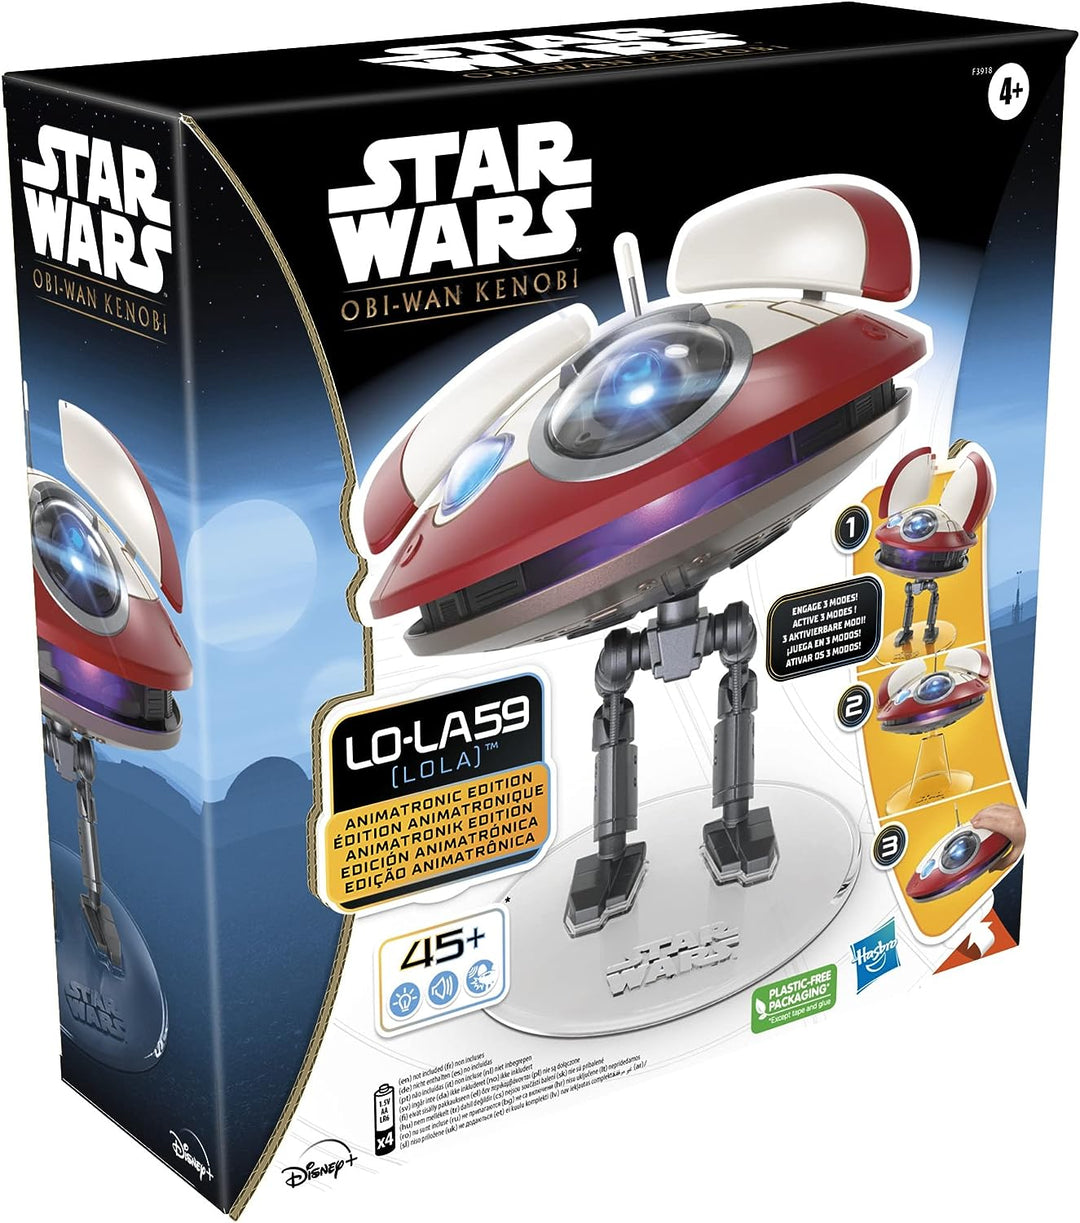 Star Wars L0-LA59 (Lola) Animatronic Edition, von der Obi-Wan-Kenobi-Serie inspiriertes Ele